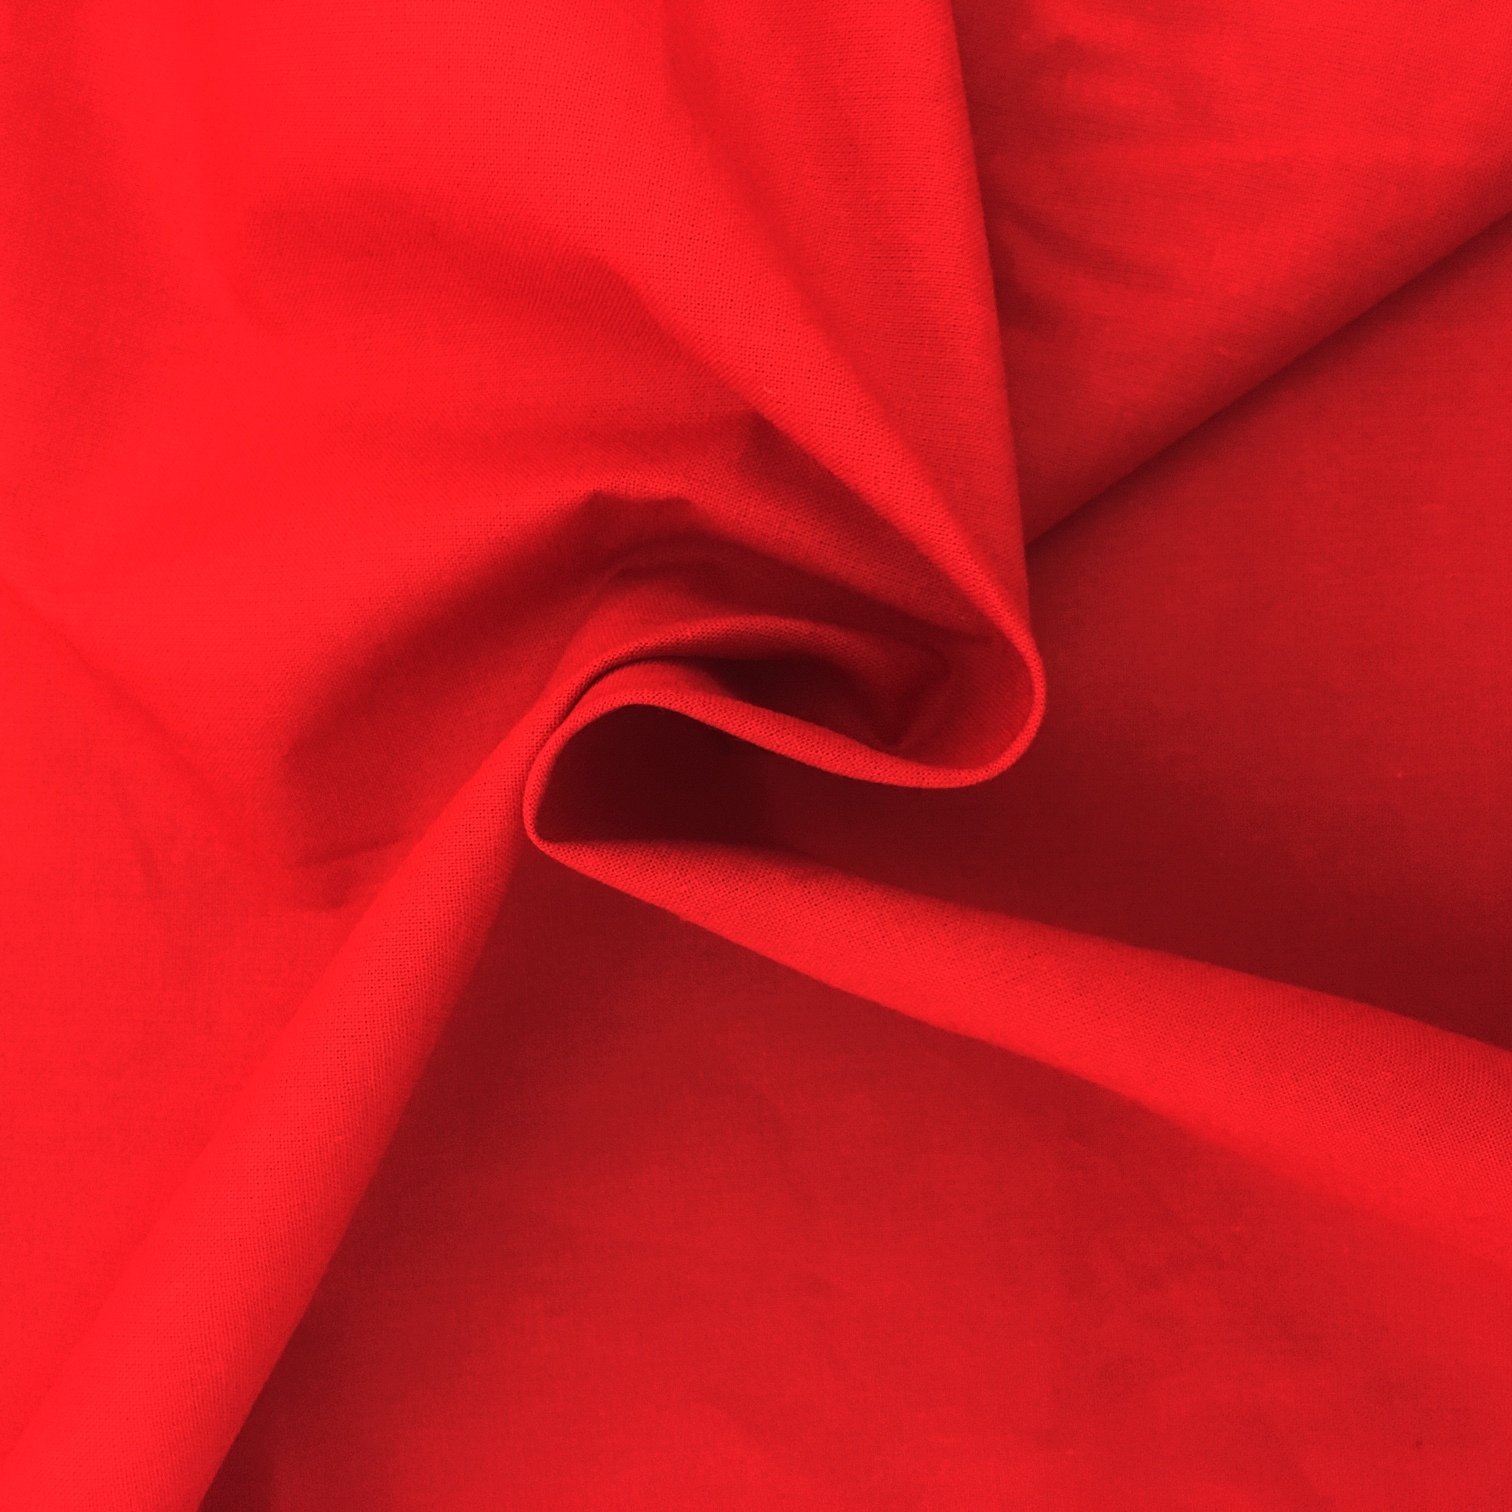 Plain red cotton fabric